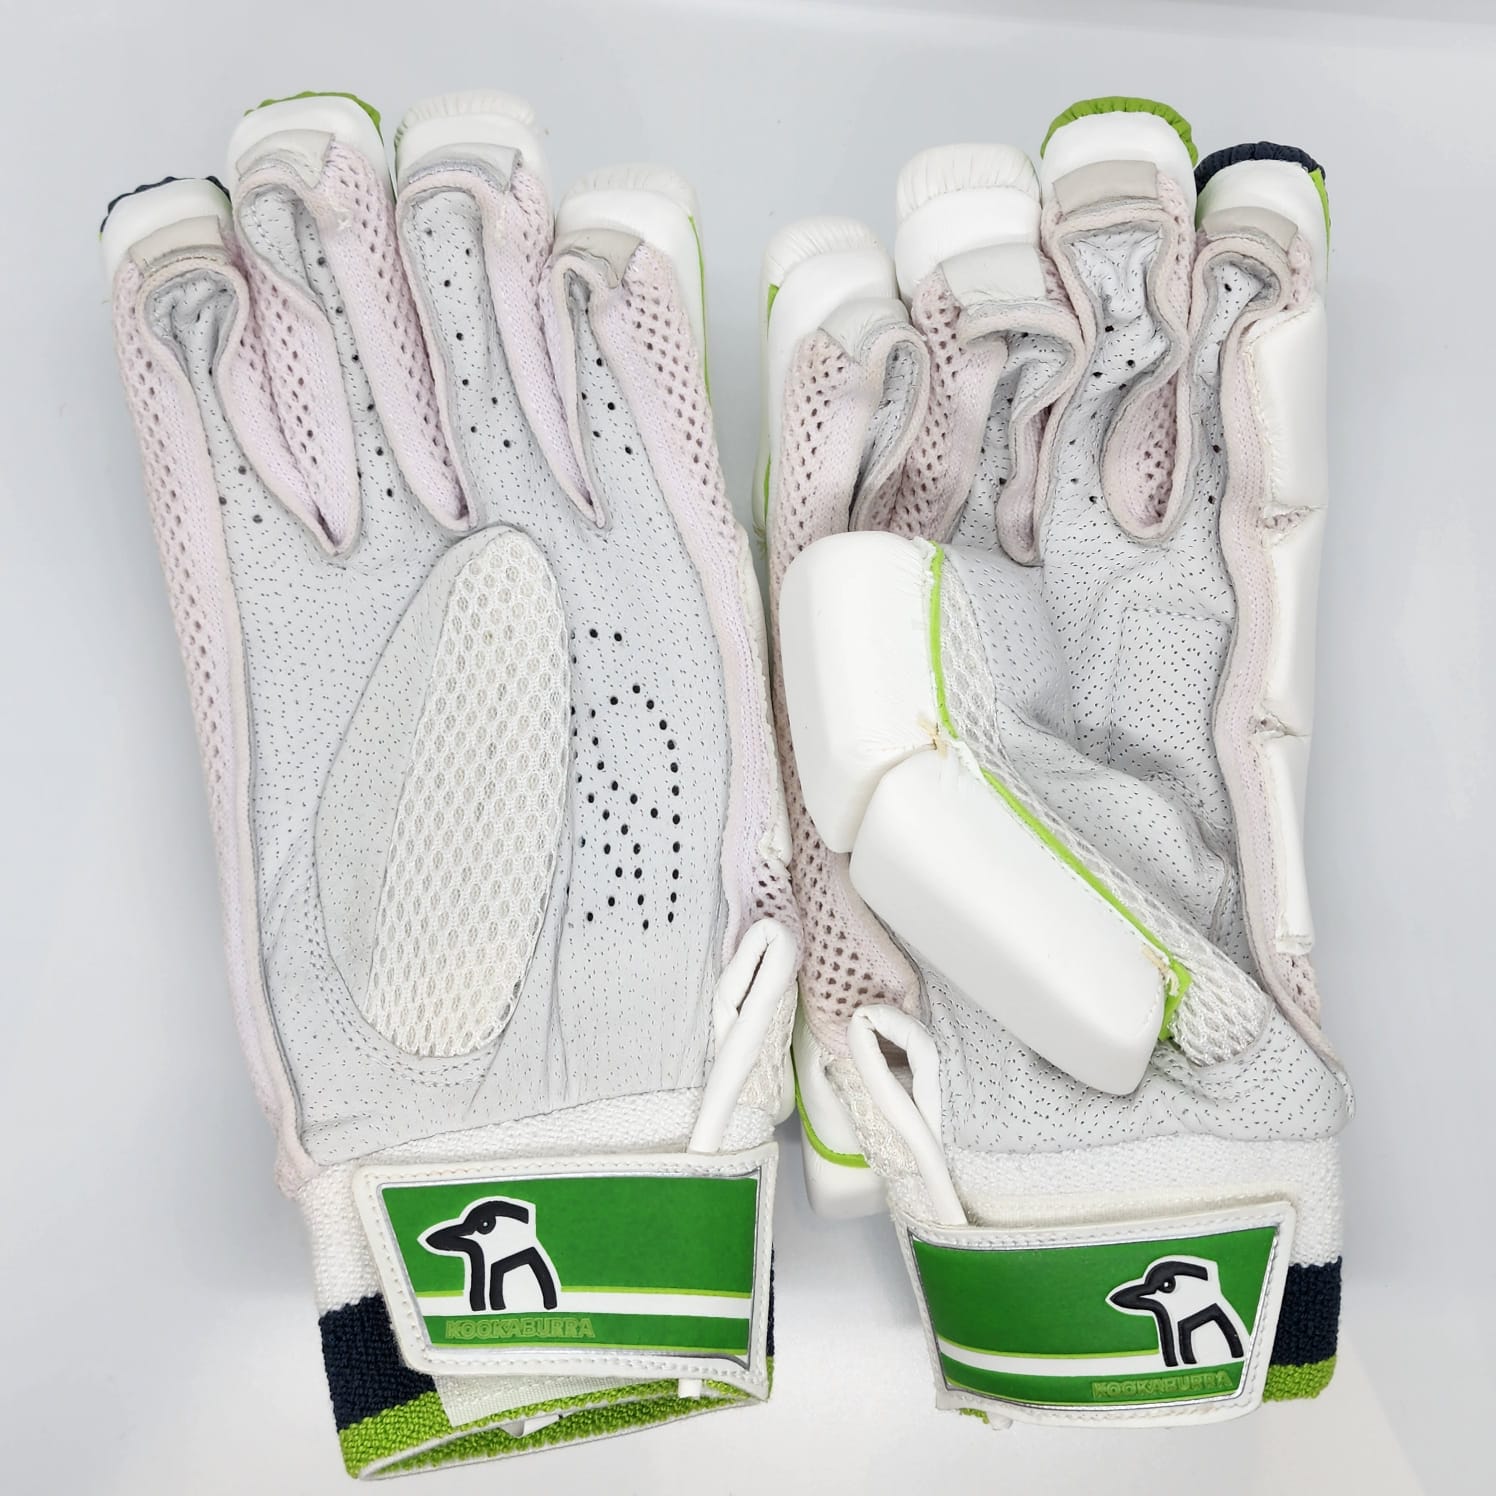 Kookaburra Kahuna Players Cricket Batting Gloves Men Size Green - For Right Hand Players